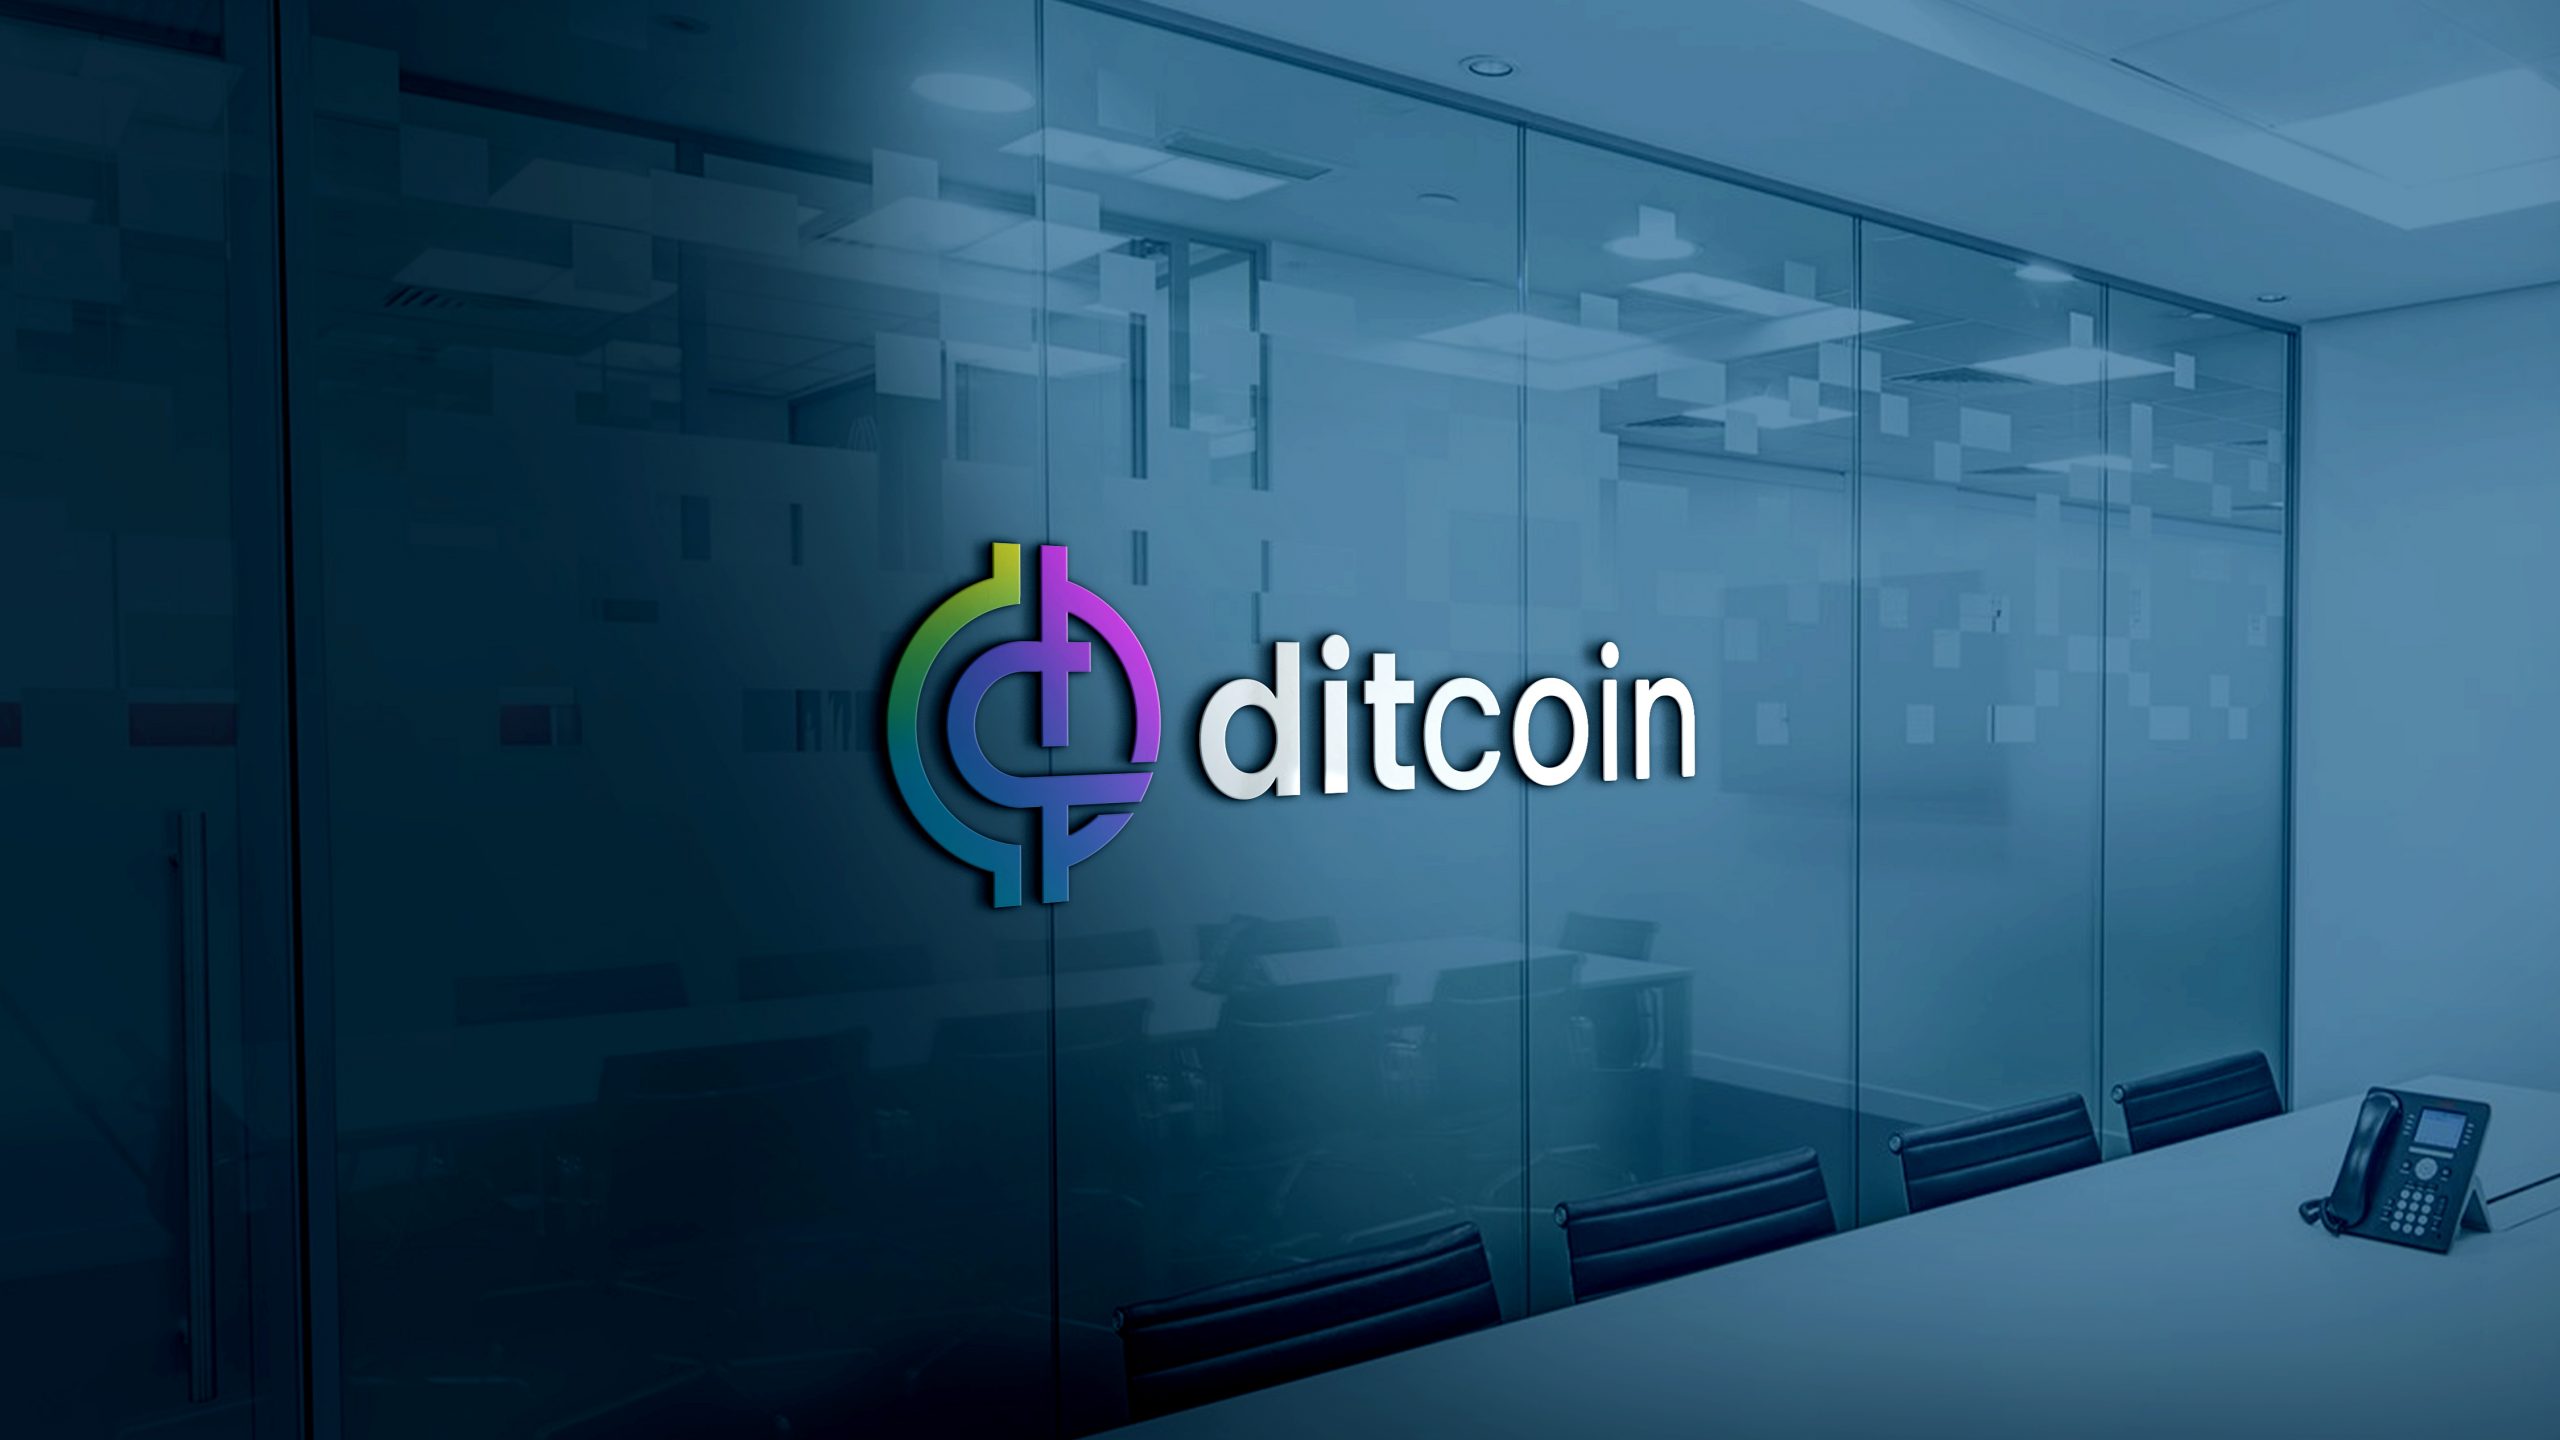 Free Download Ditcoin Logo Design